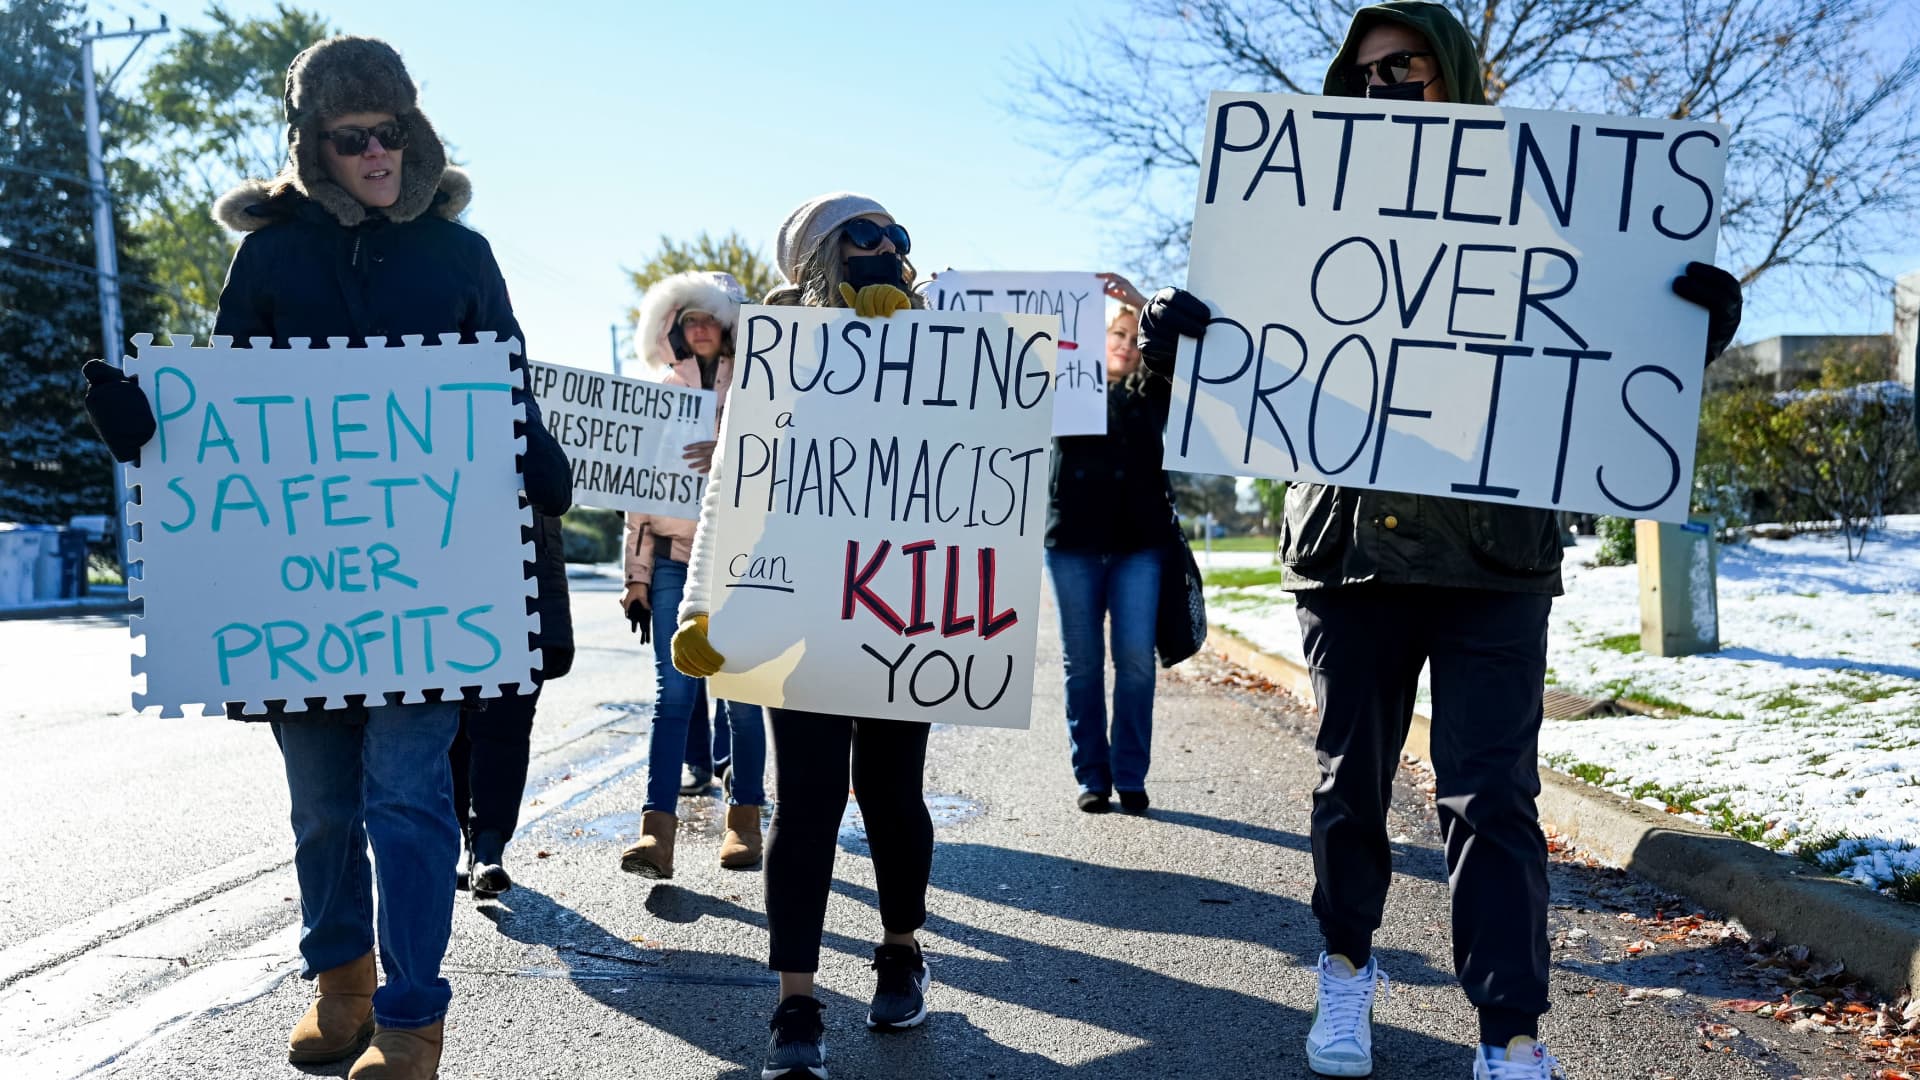 Pharmacy walkout organizers launch national push to unionize staff